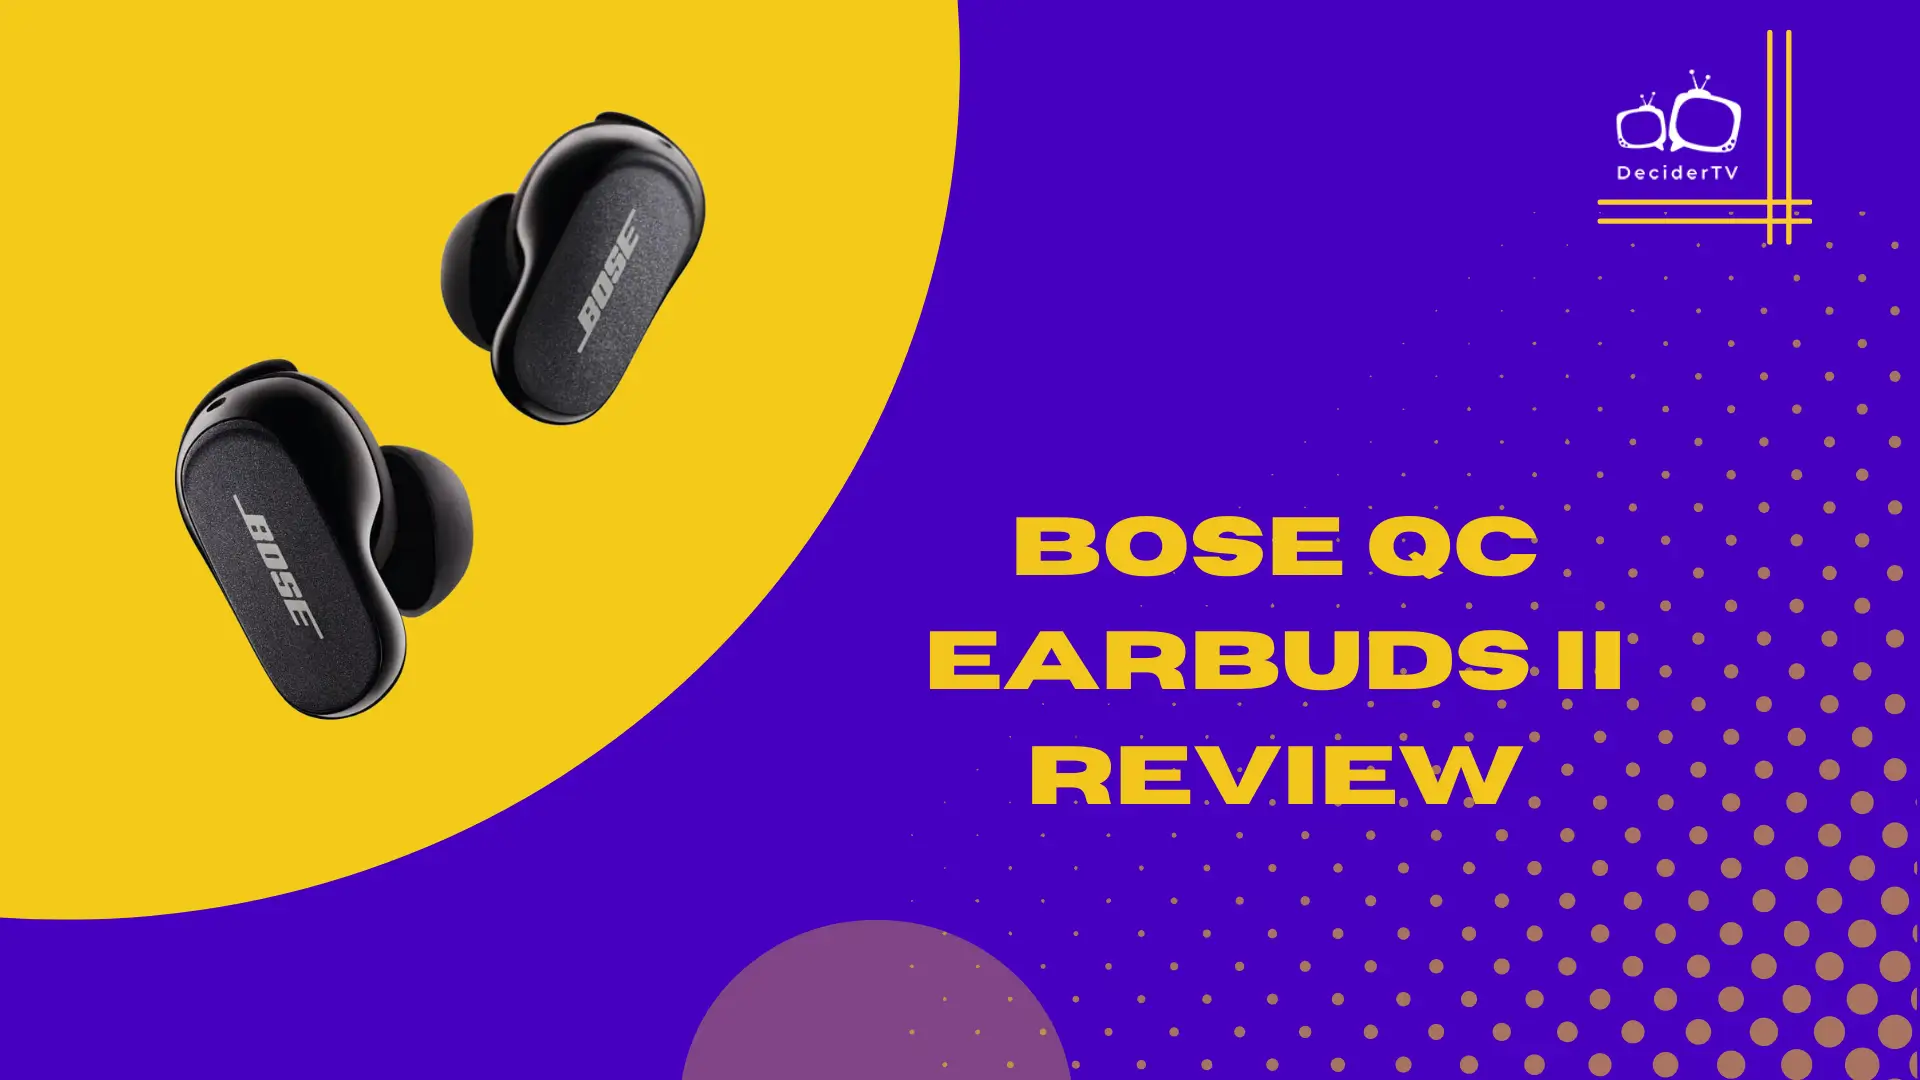 Bose QC Earbuds II